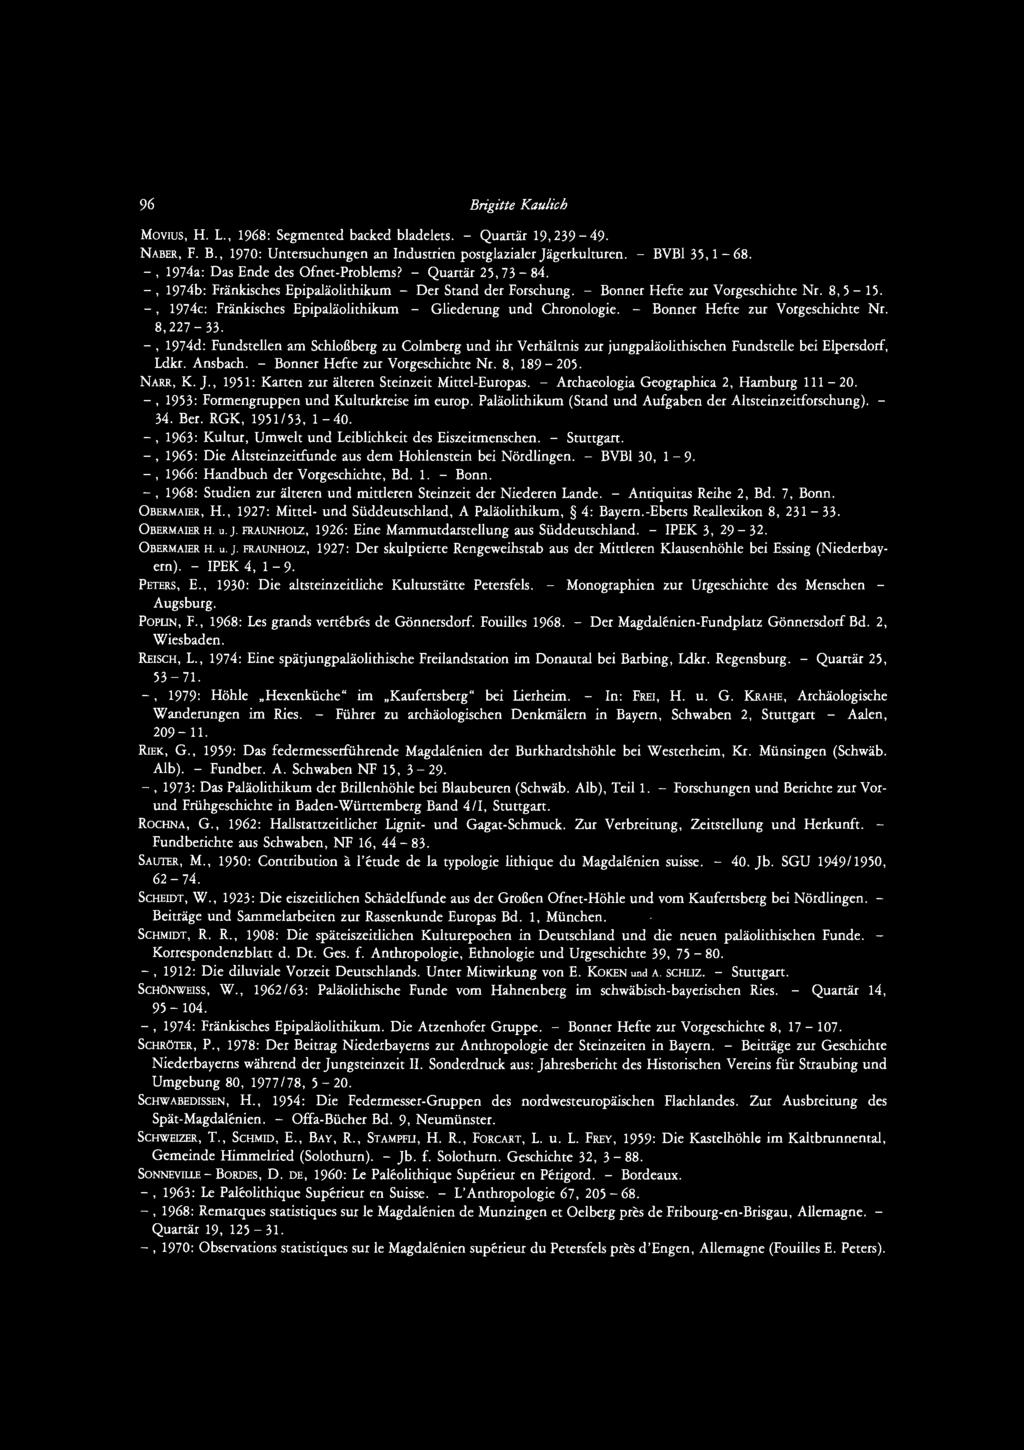 96 Brigitte Kaulzeh MoviUs, H. L., 1968: Segmented backed bladelets. - Quartär 19, 239-49. NABER, F. B., 1970: Untersuchungen an Industrien postglazialer Jägerkulturen. - BVBI 35, 1-68.